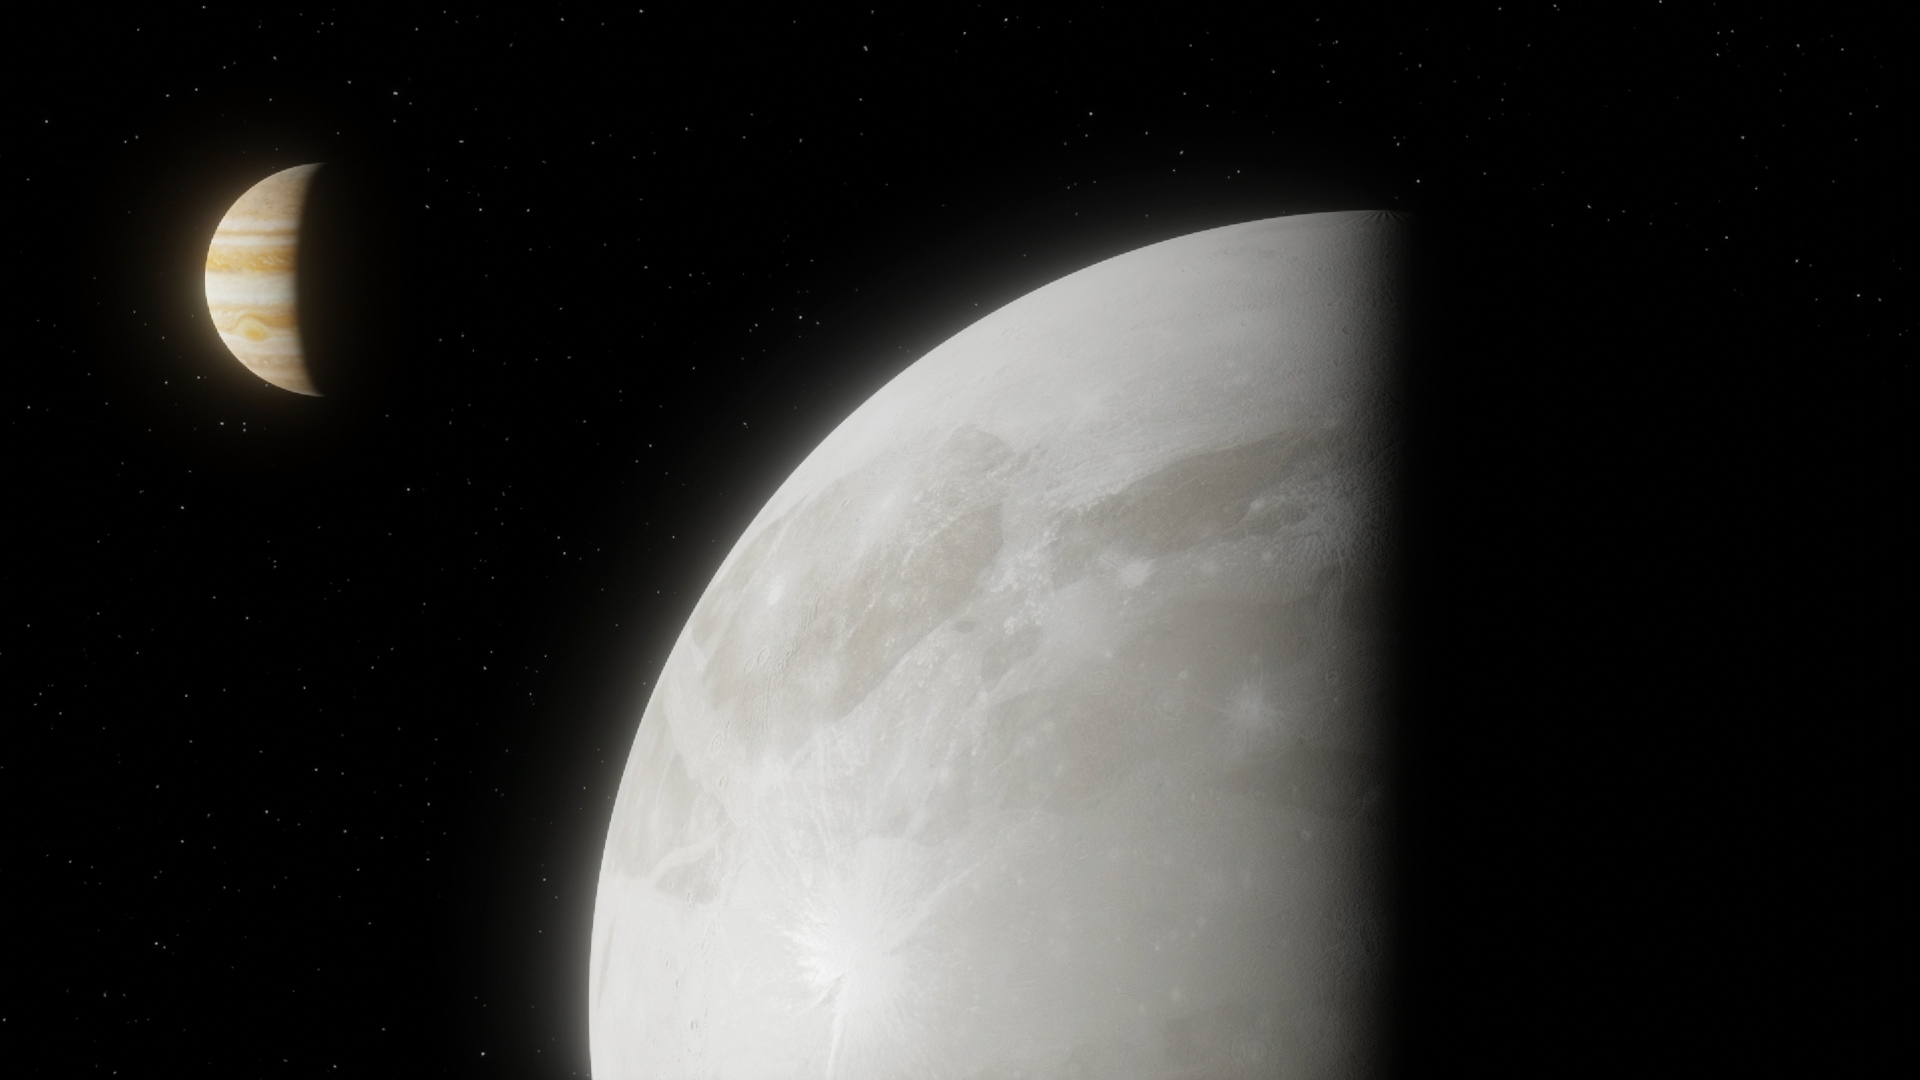 Preview Image for Hubble Finds Evidence of Water Vapor at Jupiter’s Moon Ganymede